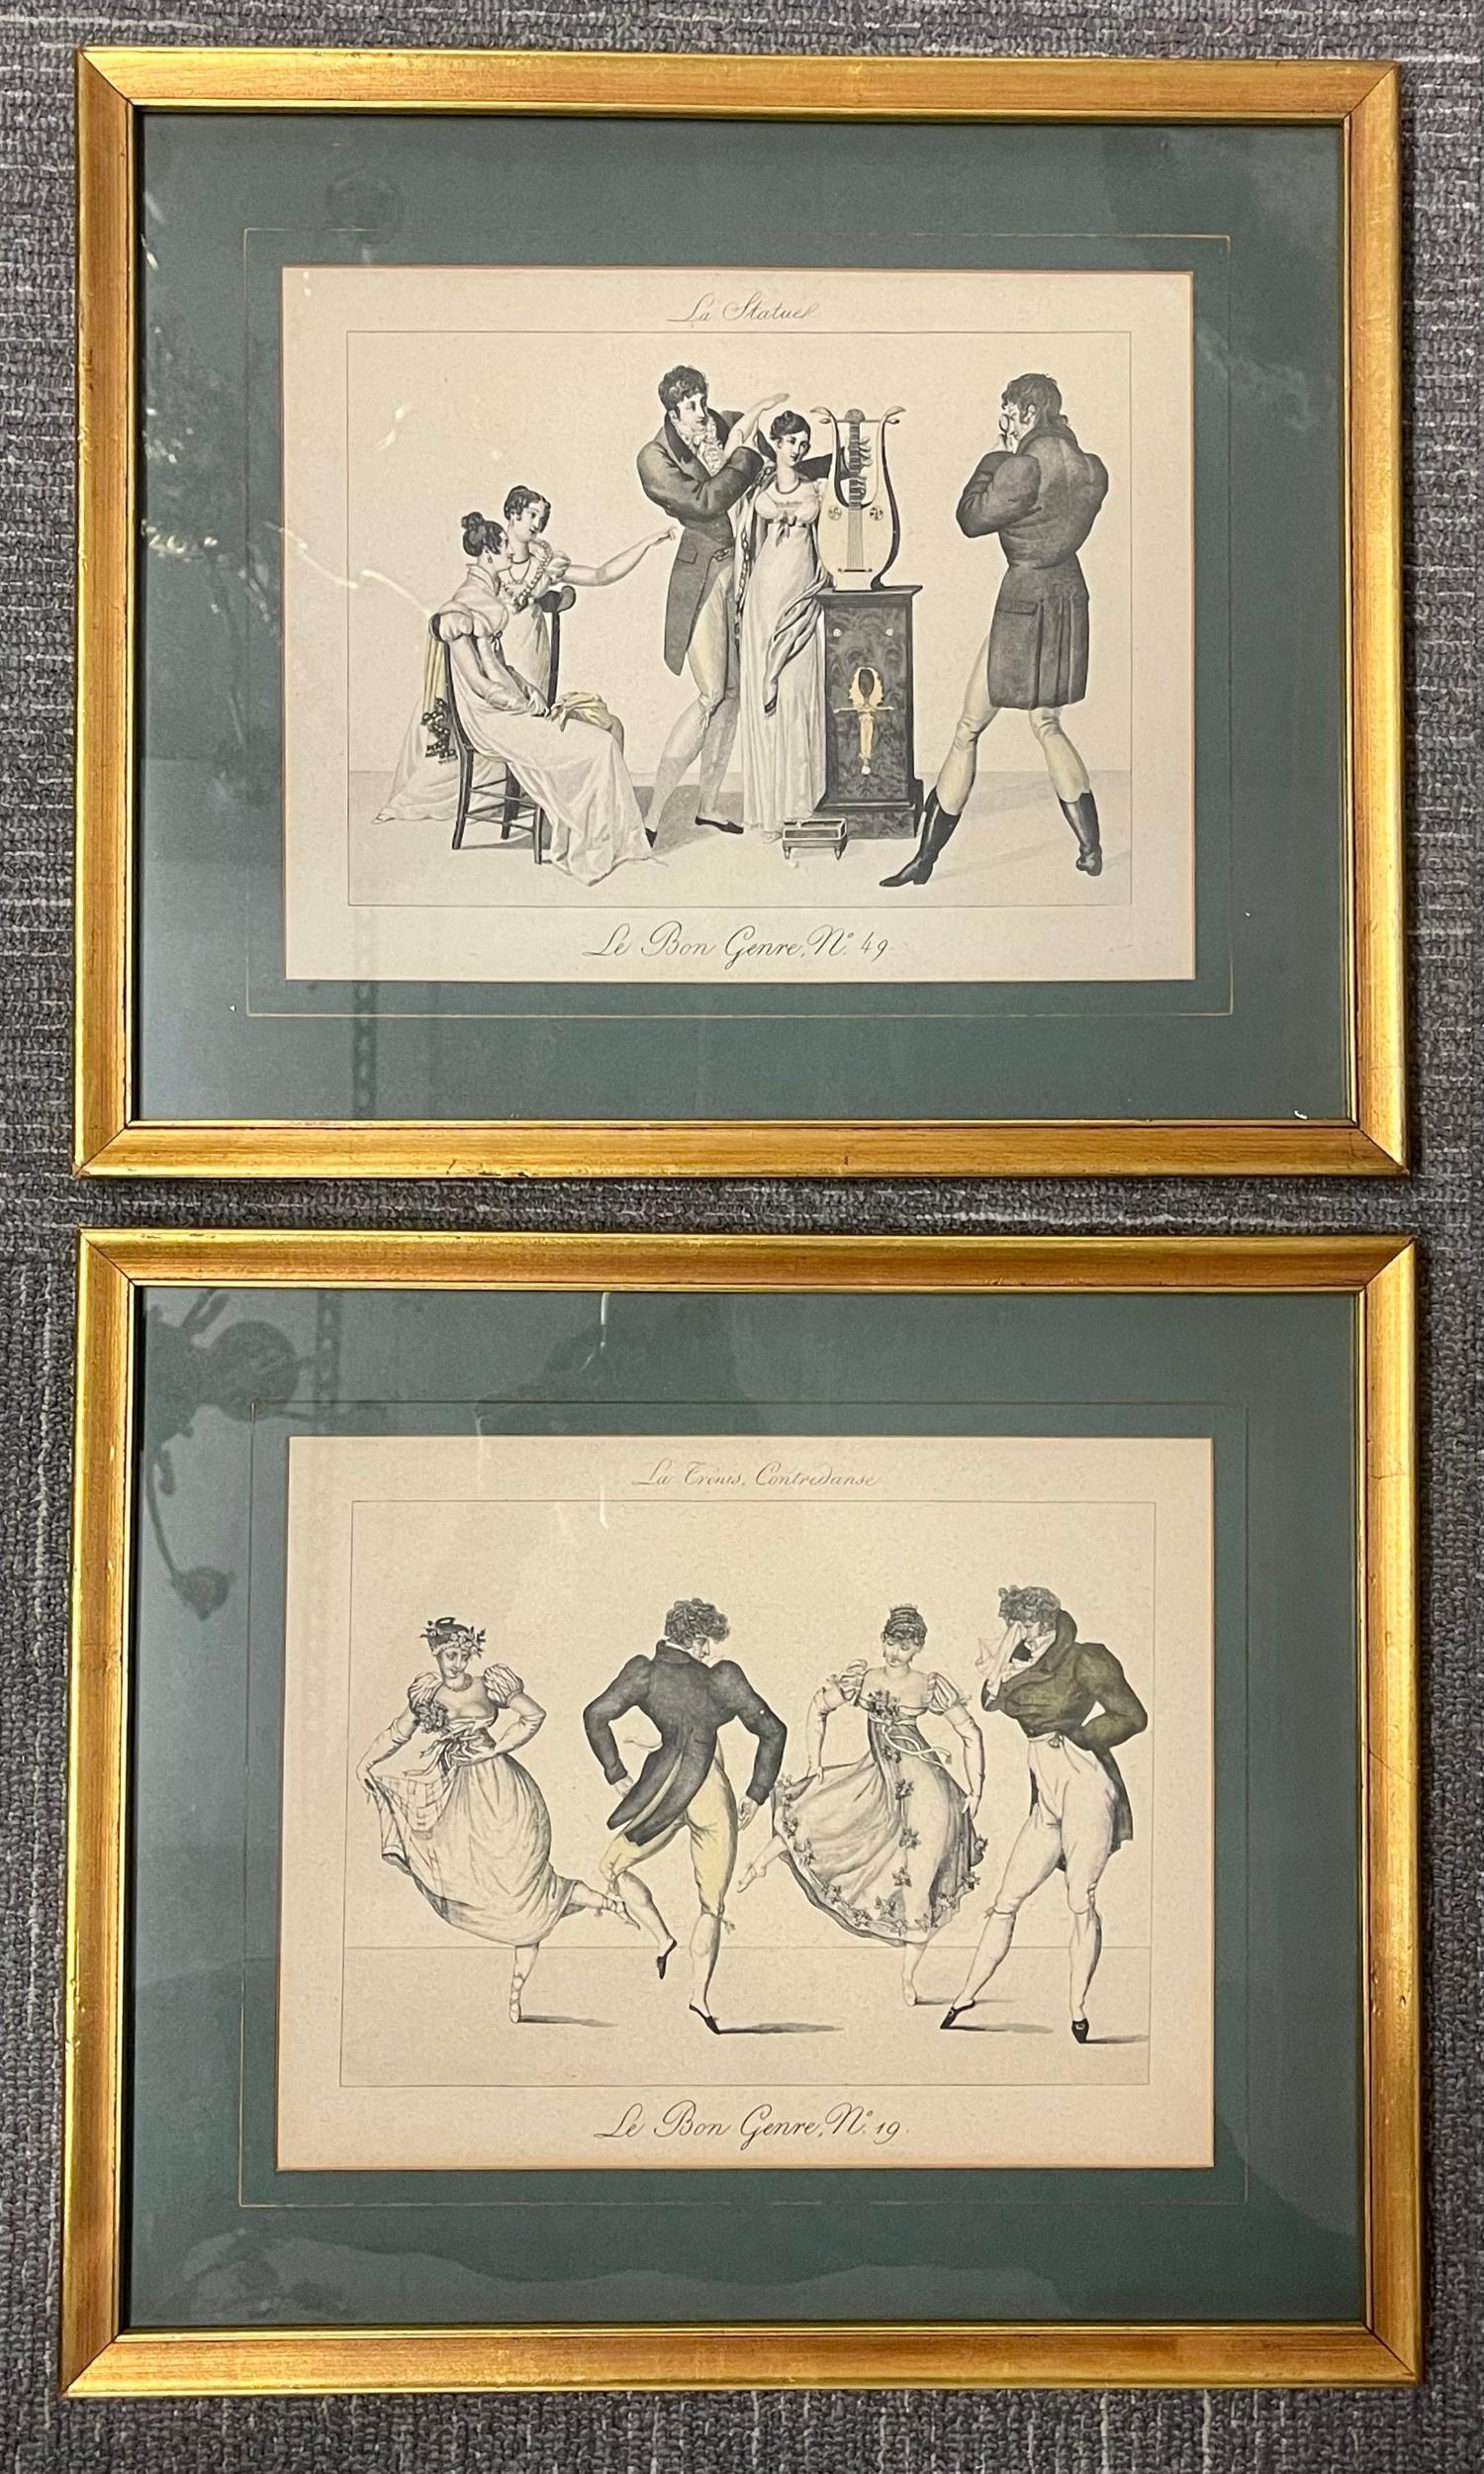 A group of four framed plates each matted in a gilt frame.
'Le Bon Genre' antique re-edition fashion prints
France, 1940s
The original Le Bon Genre series ran from about 1801 to 1822 (La Mésangère editor).